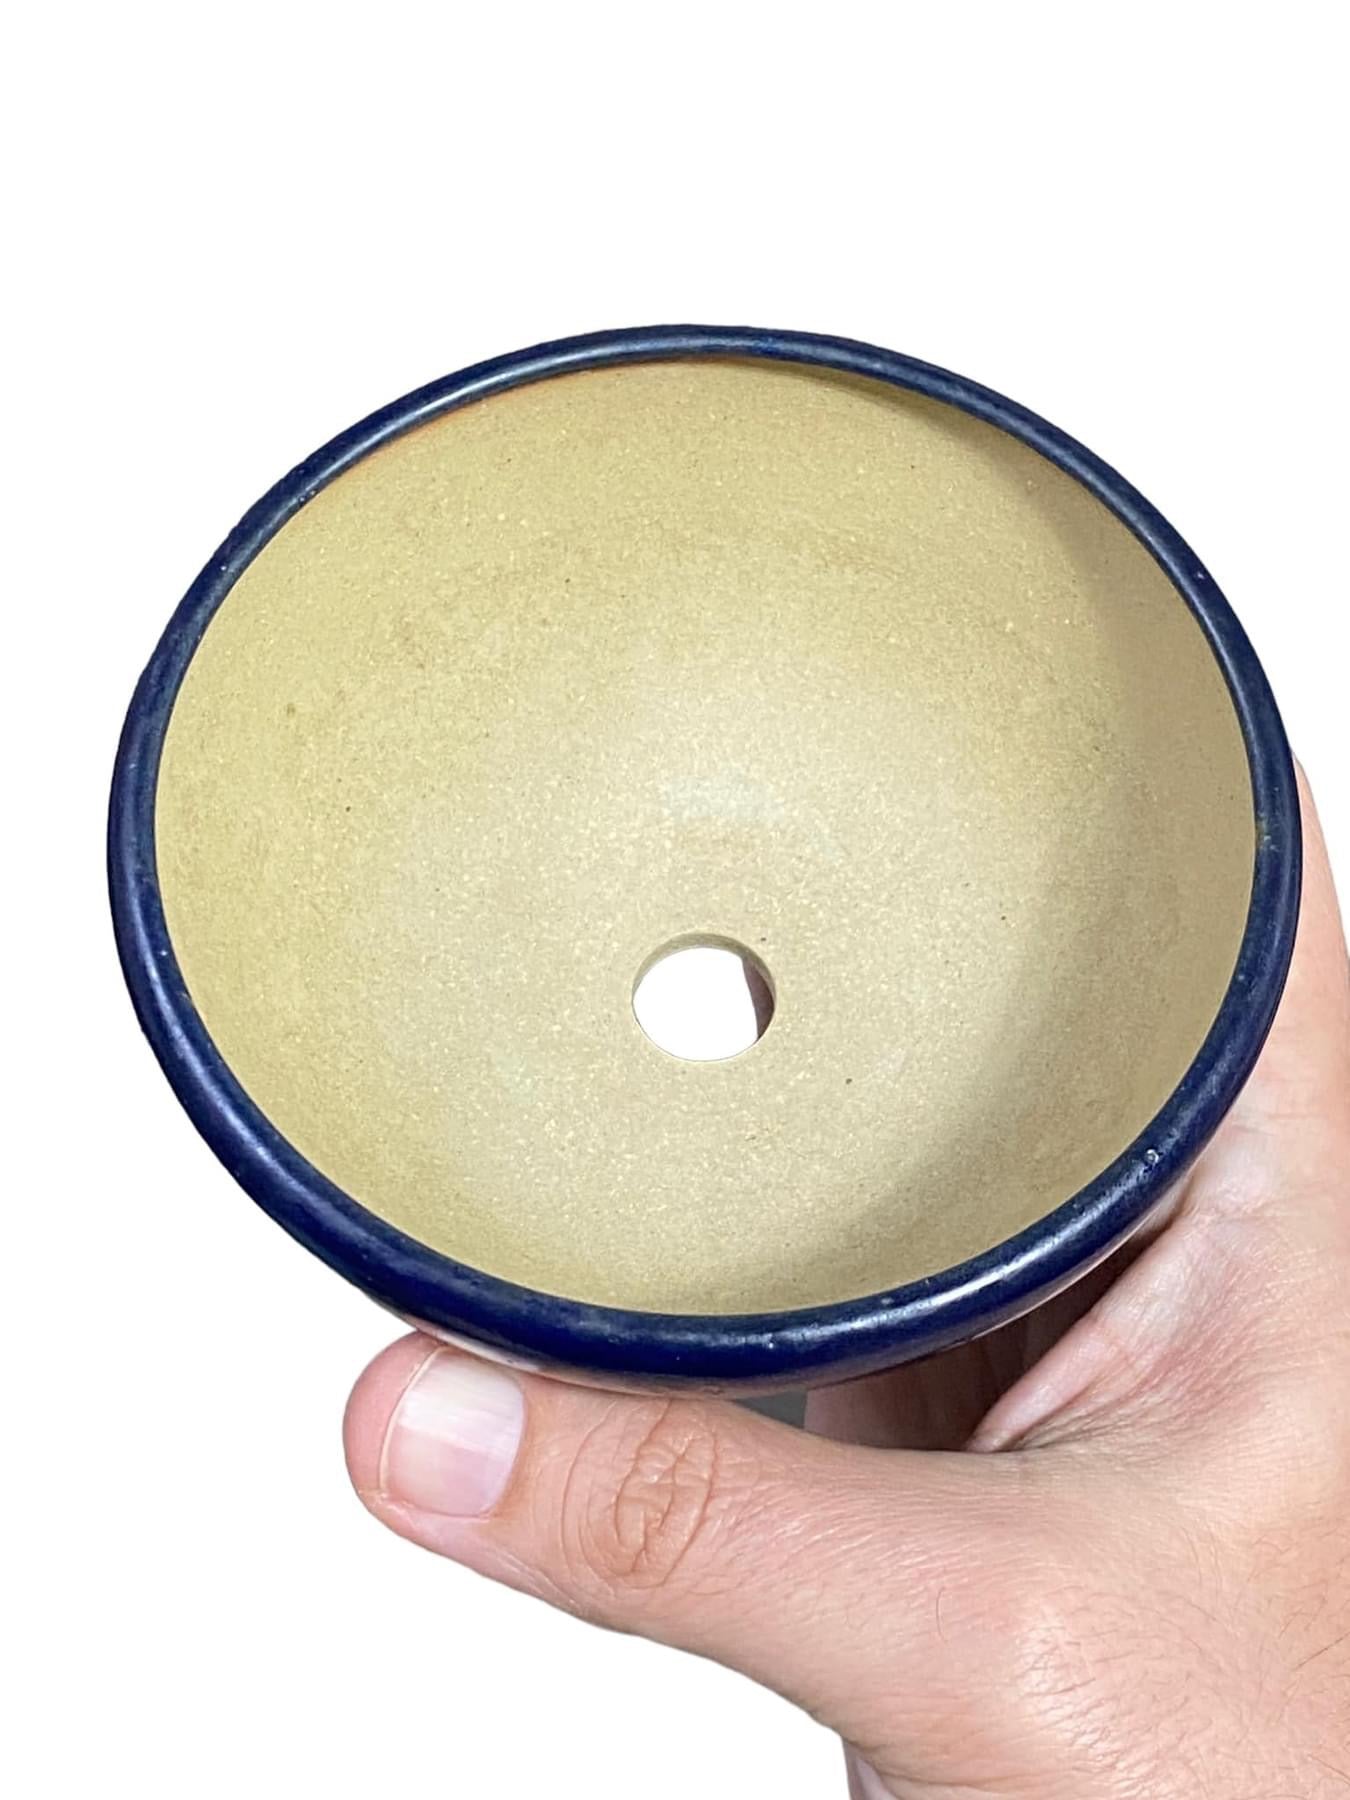 Heian Kosen - Small Footed Bonsai Pot (Discounted) (4-3/4” wide)